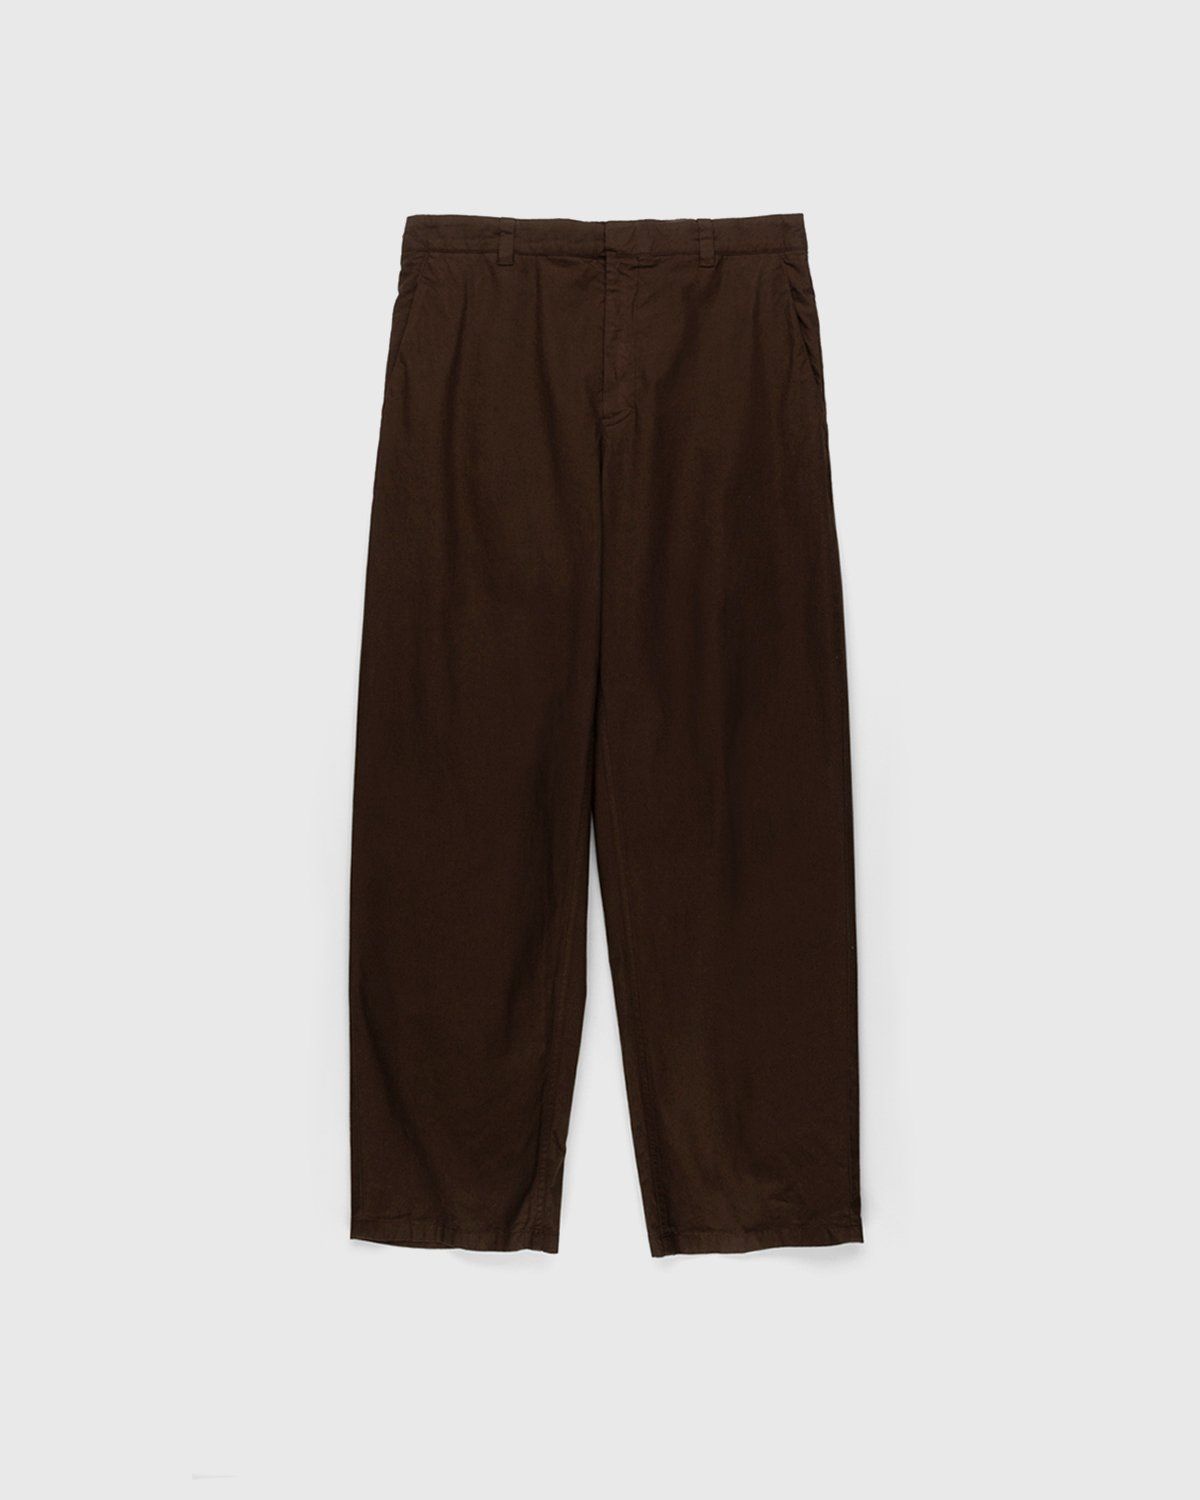 Jil Sander – Cotton Trousers Dark Brown - Trousers - Brown - Image 2